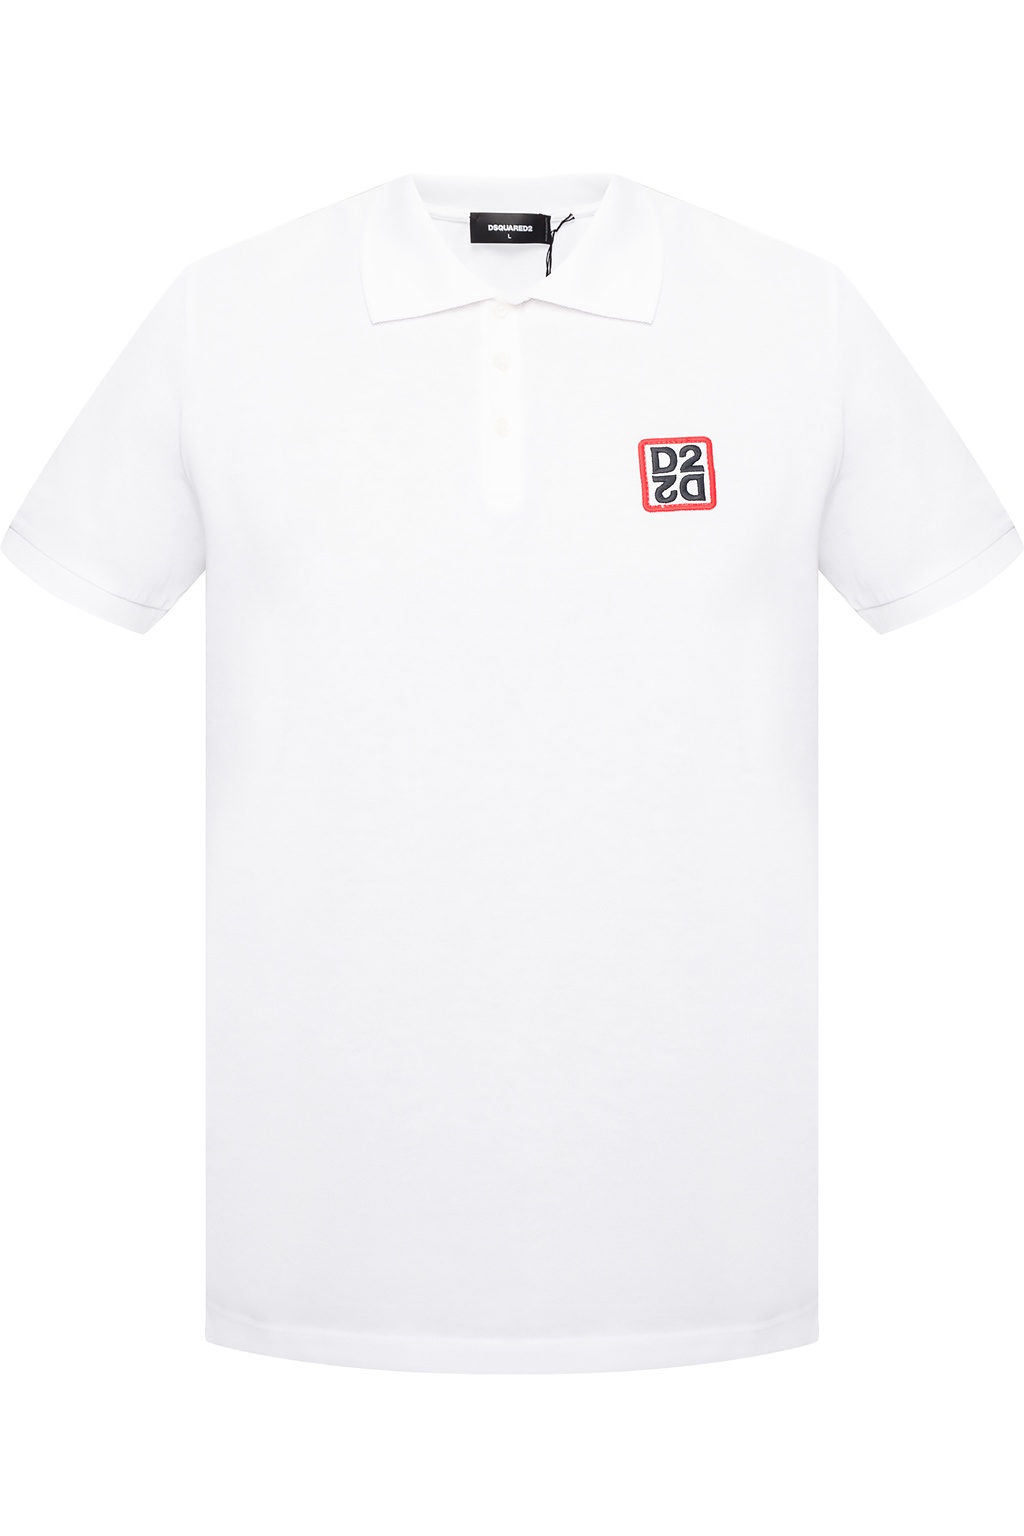 Polo shirt with logo Dsquared2 - Vitkac HK